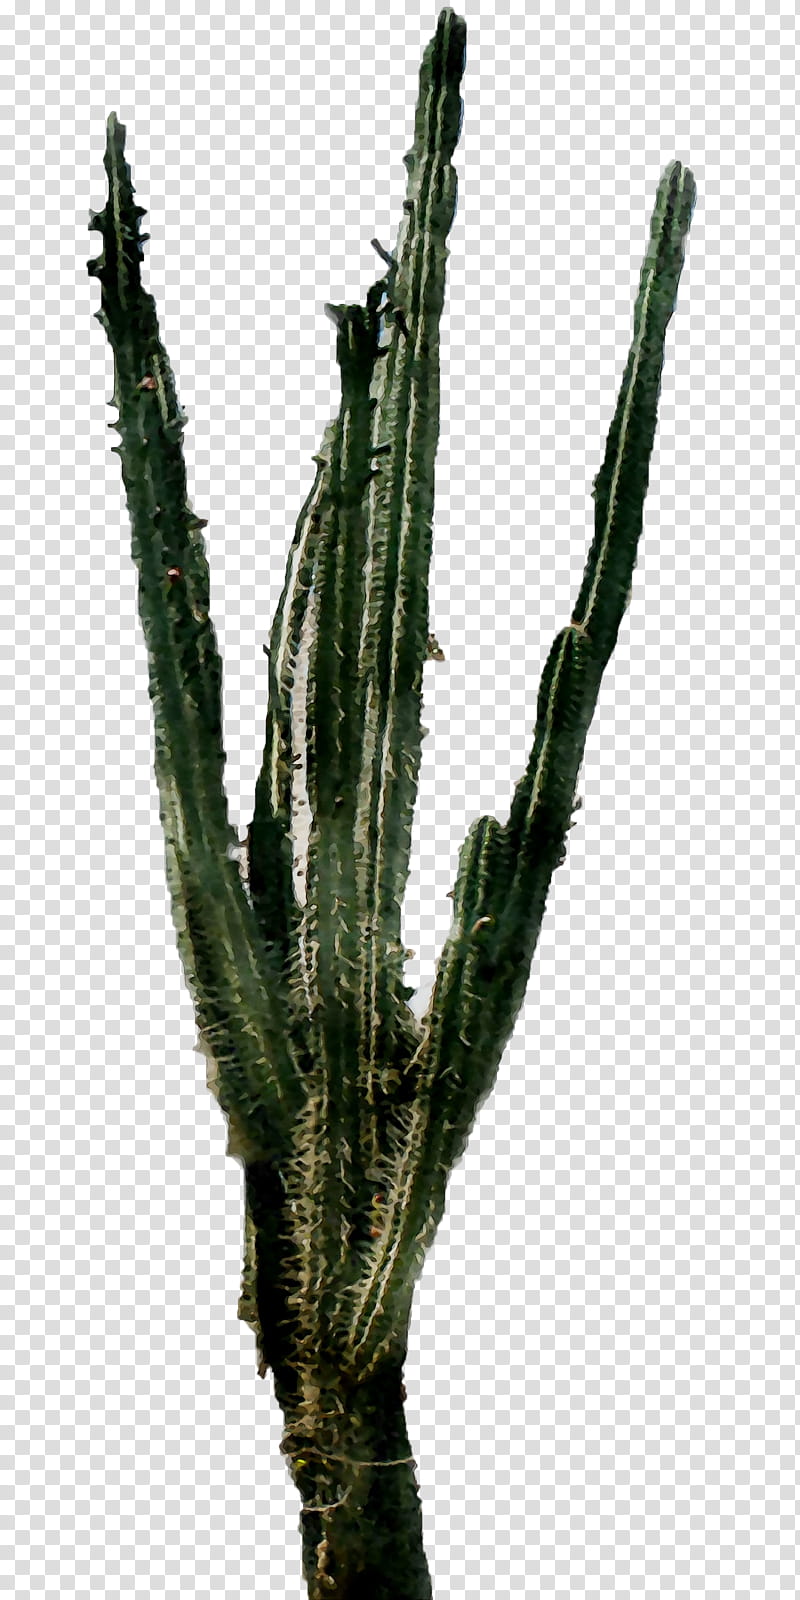 Cactus, Triangle Cactus, Echinocereus, Plant Stem, Plants, Acanthocereus, Acanthocereus Tetragonus, Saguaro transparent background PNG clipart